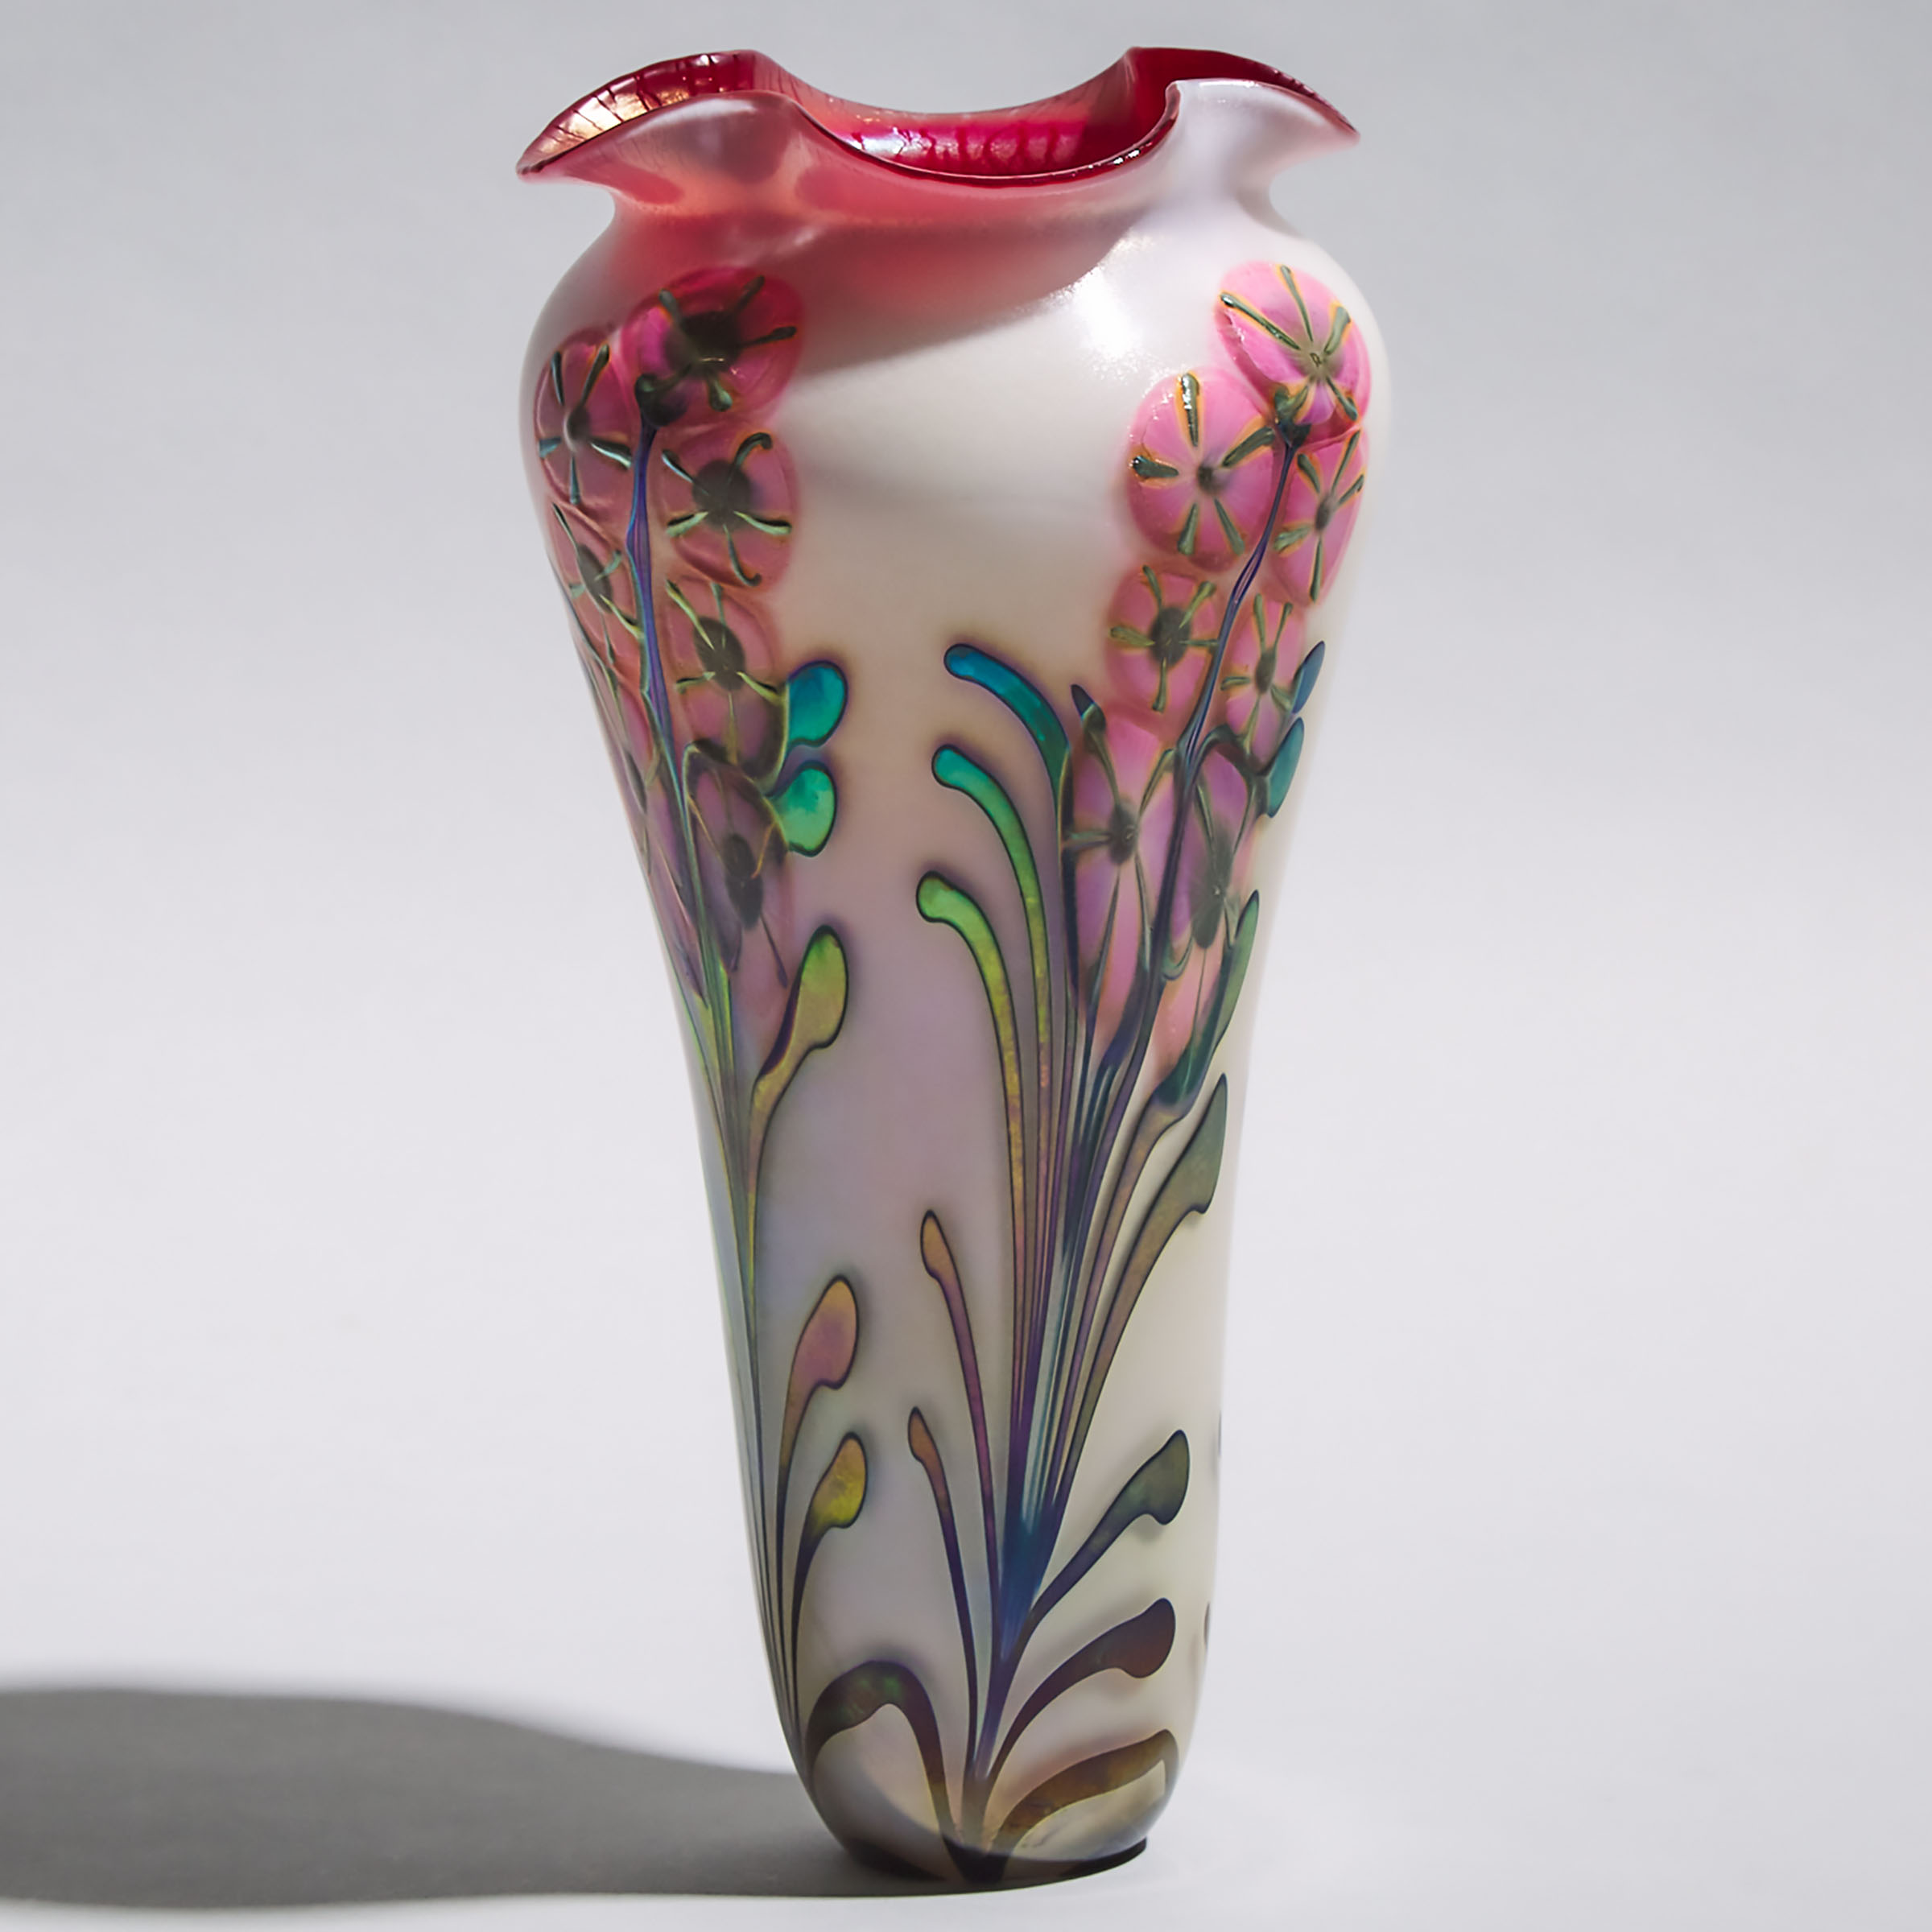 John Lotton (American, b.1964), Iridescent 'Hollyhock' Glass Vase, dated 1990